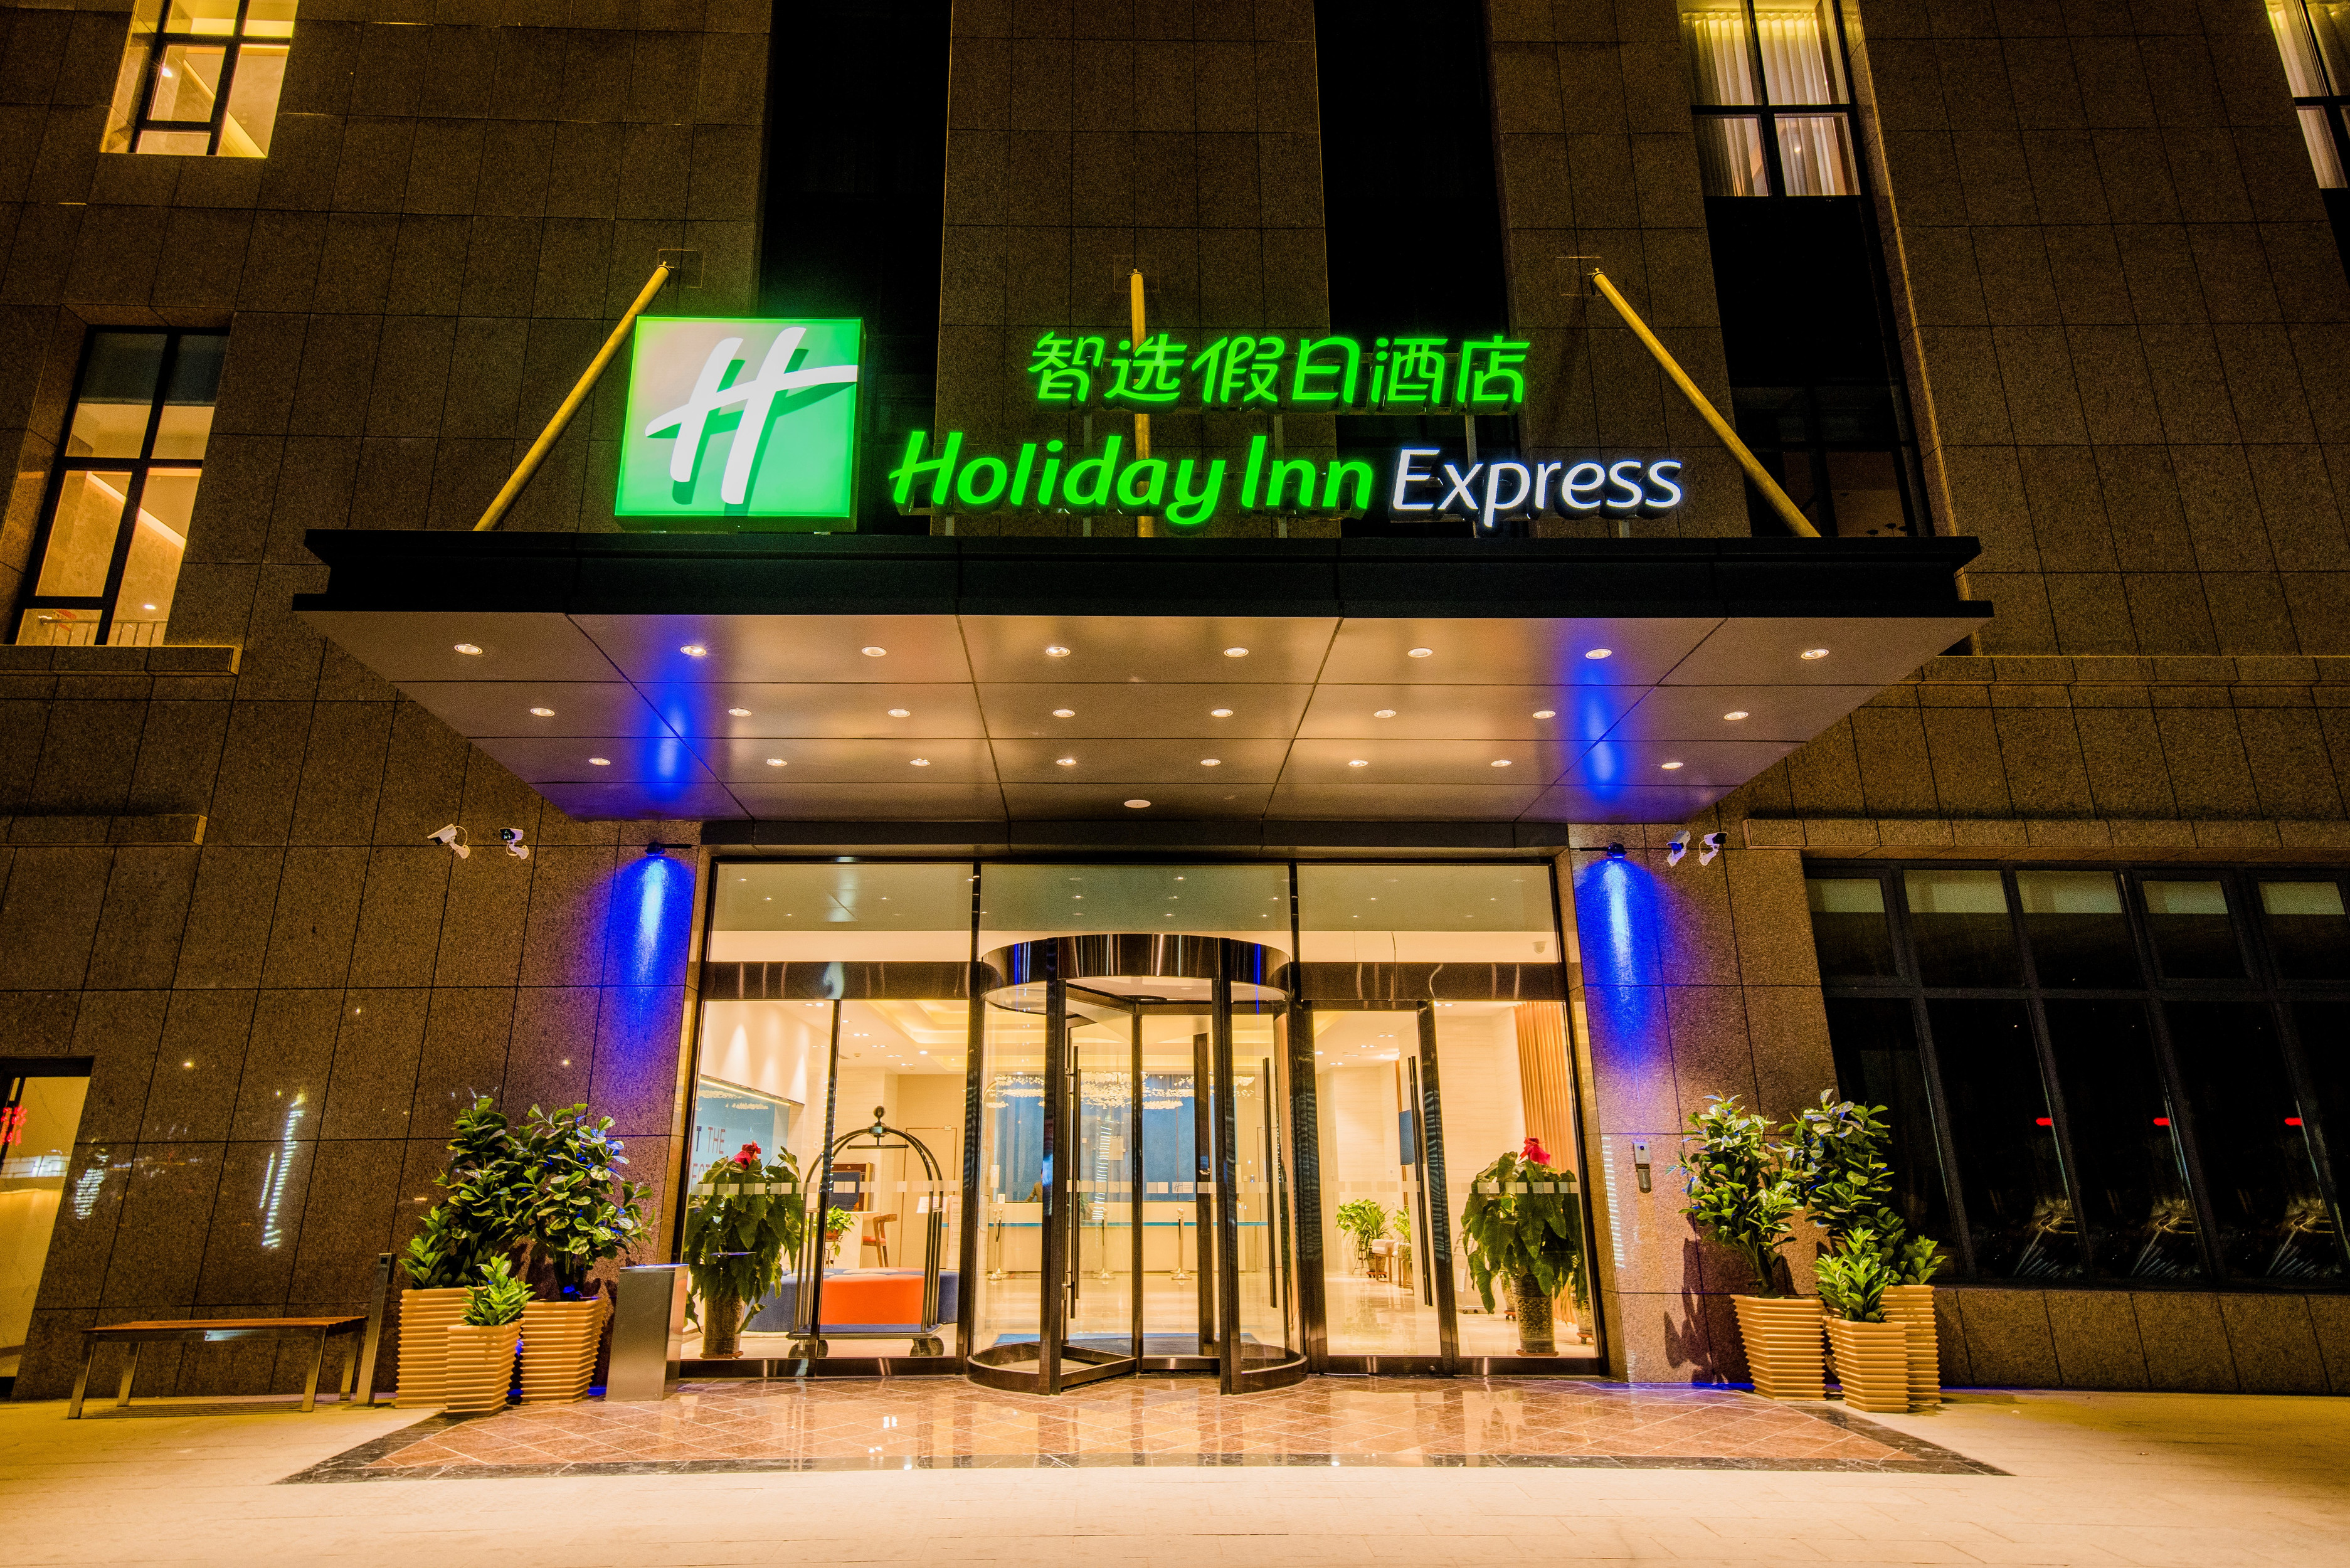 Holiday Inn Express 深圳南山智选假日酒店 洲际酒店集团旗下酒店